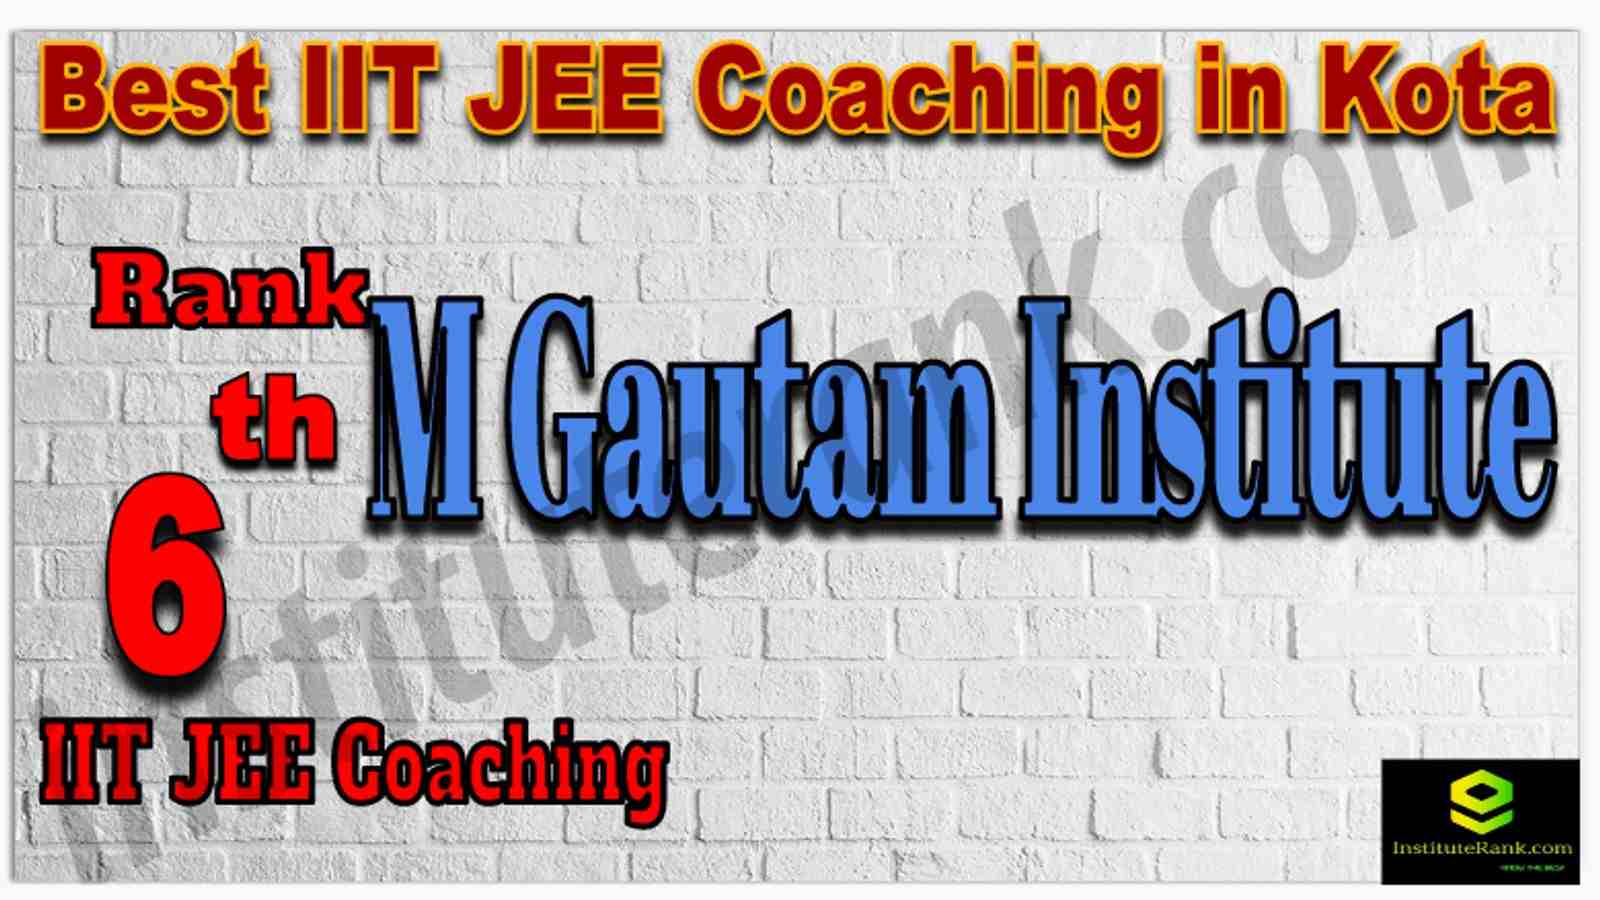 Rank 6th Best IIT JEE Coaching in Kota